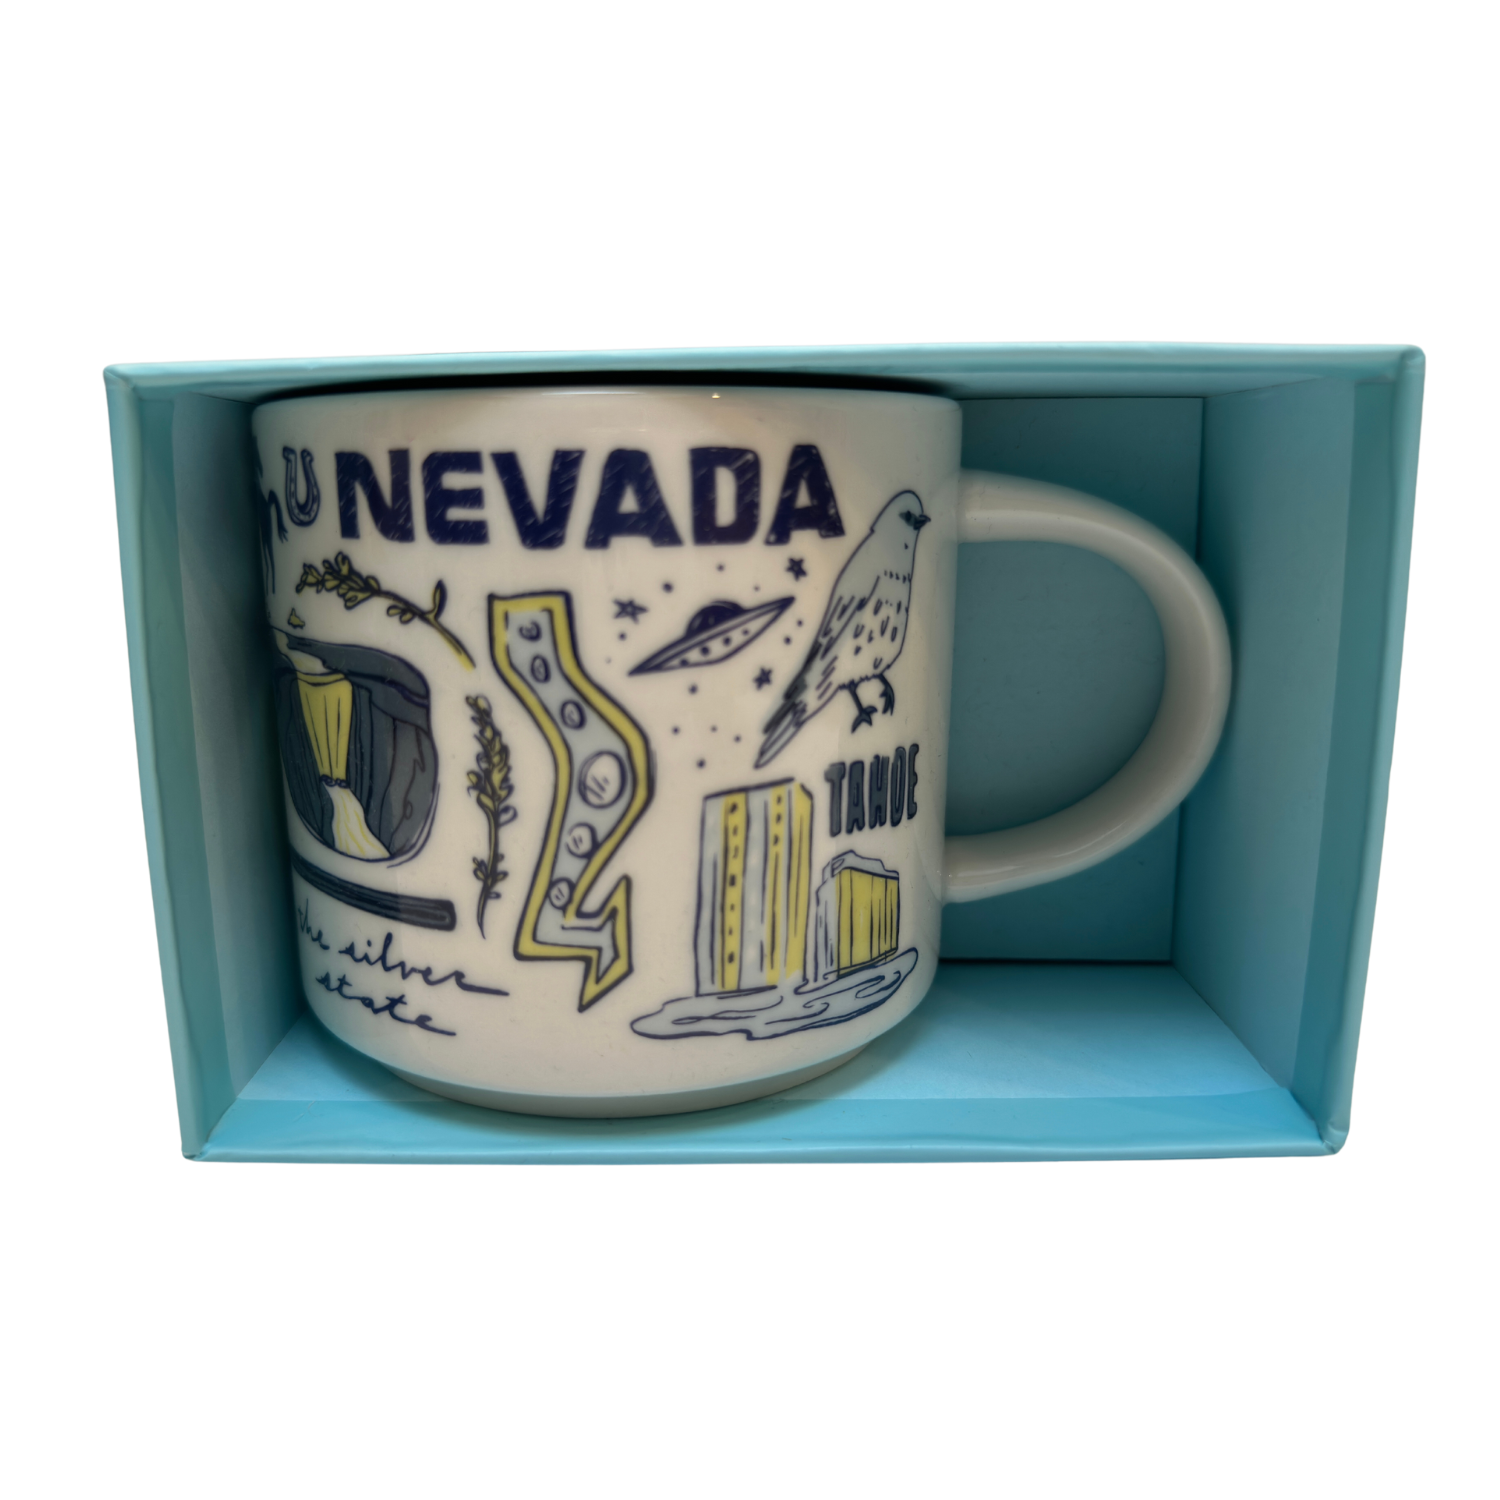 Starbucks Been There Series Nevada Ceramic Coffee Mug, 14 Oz